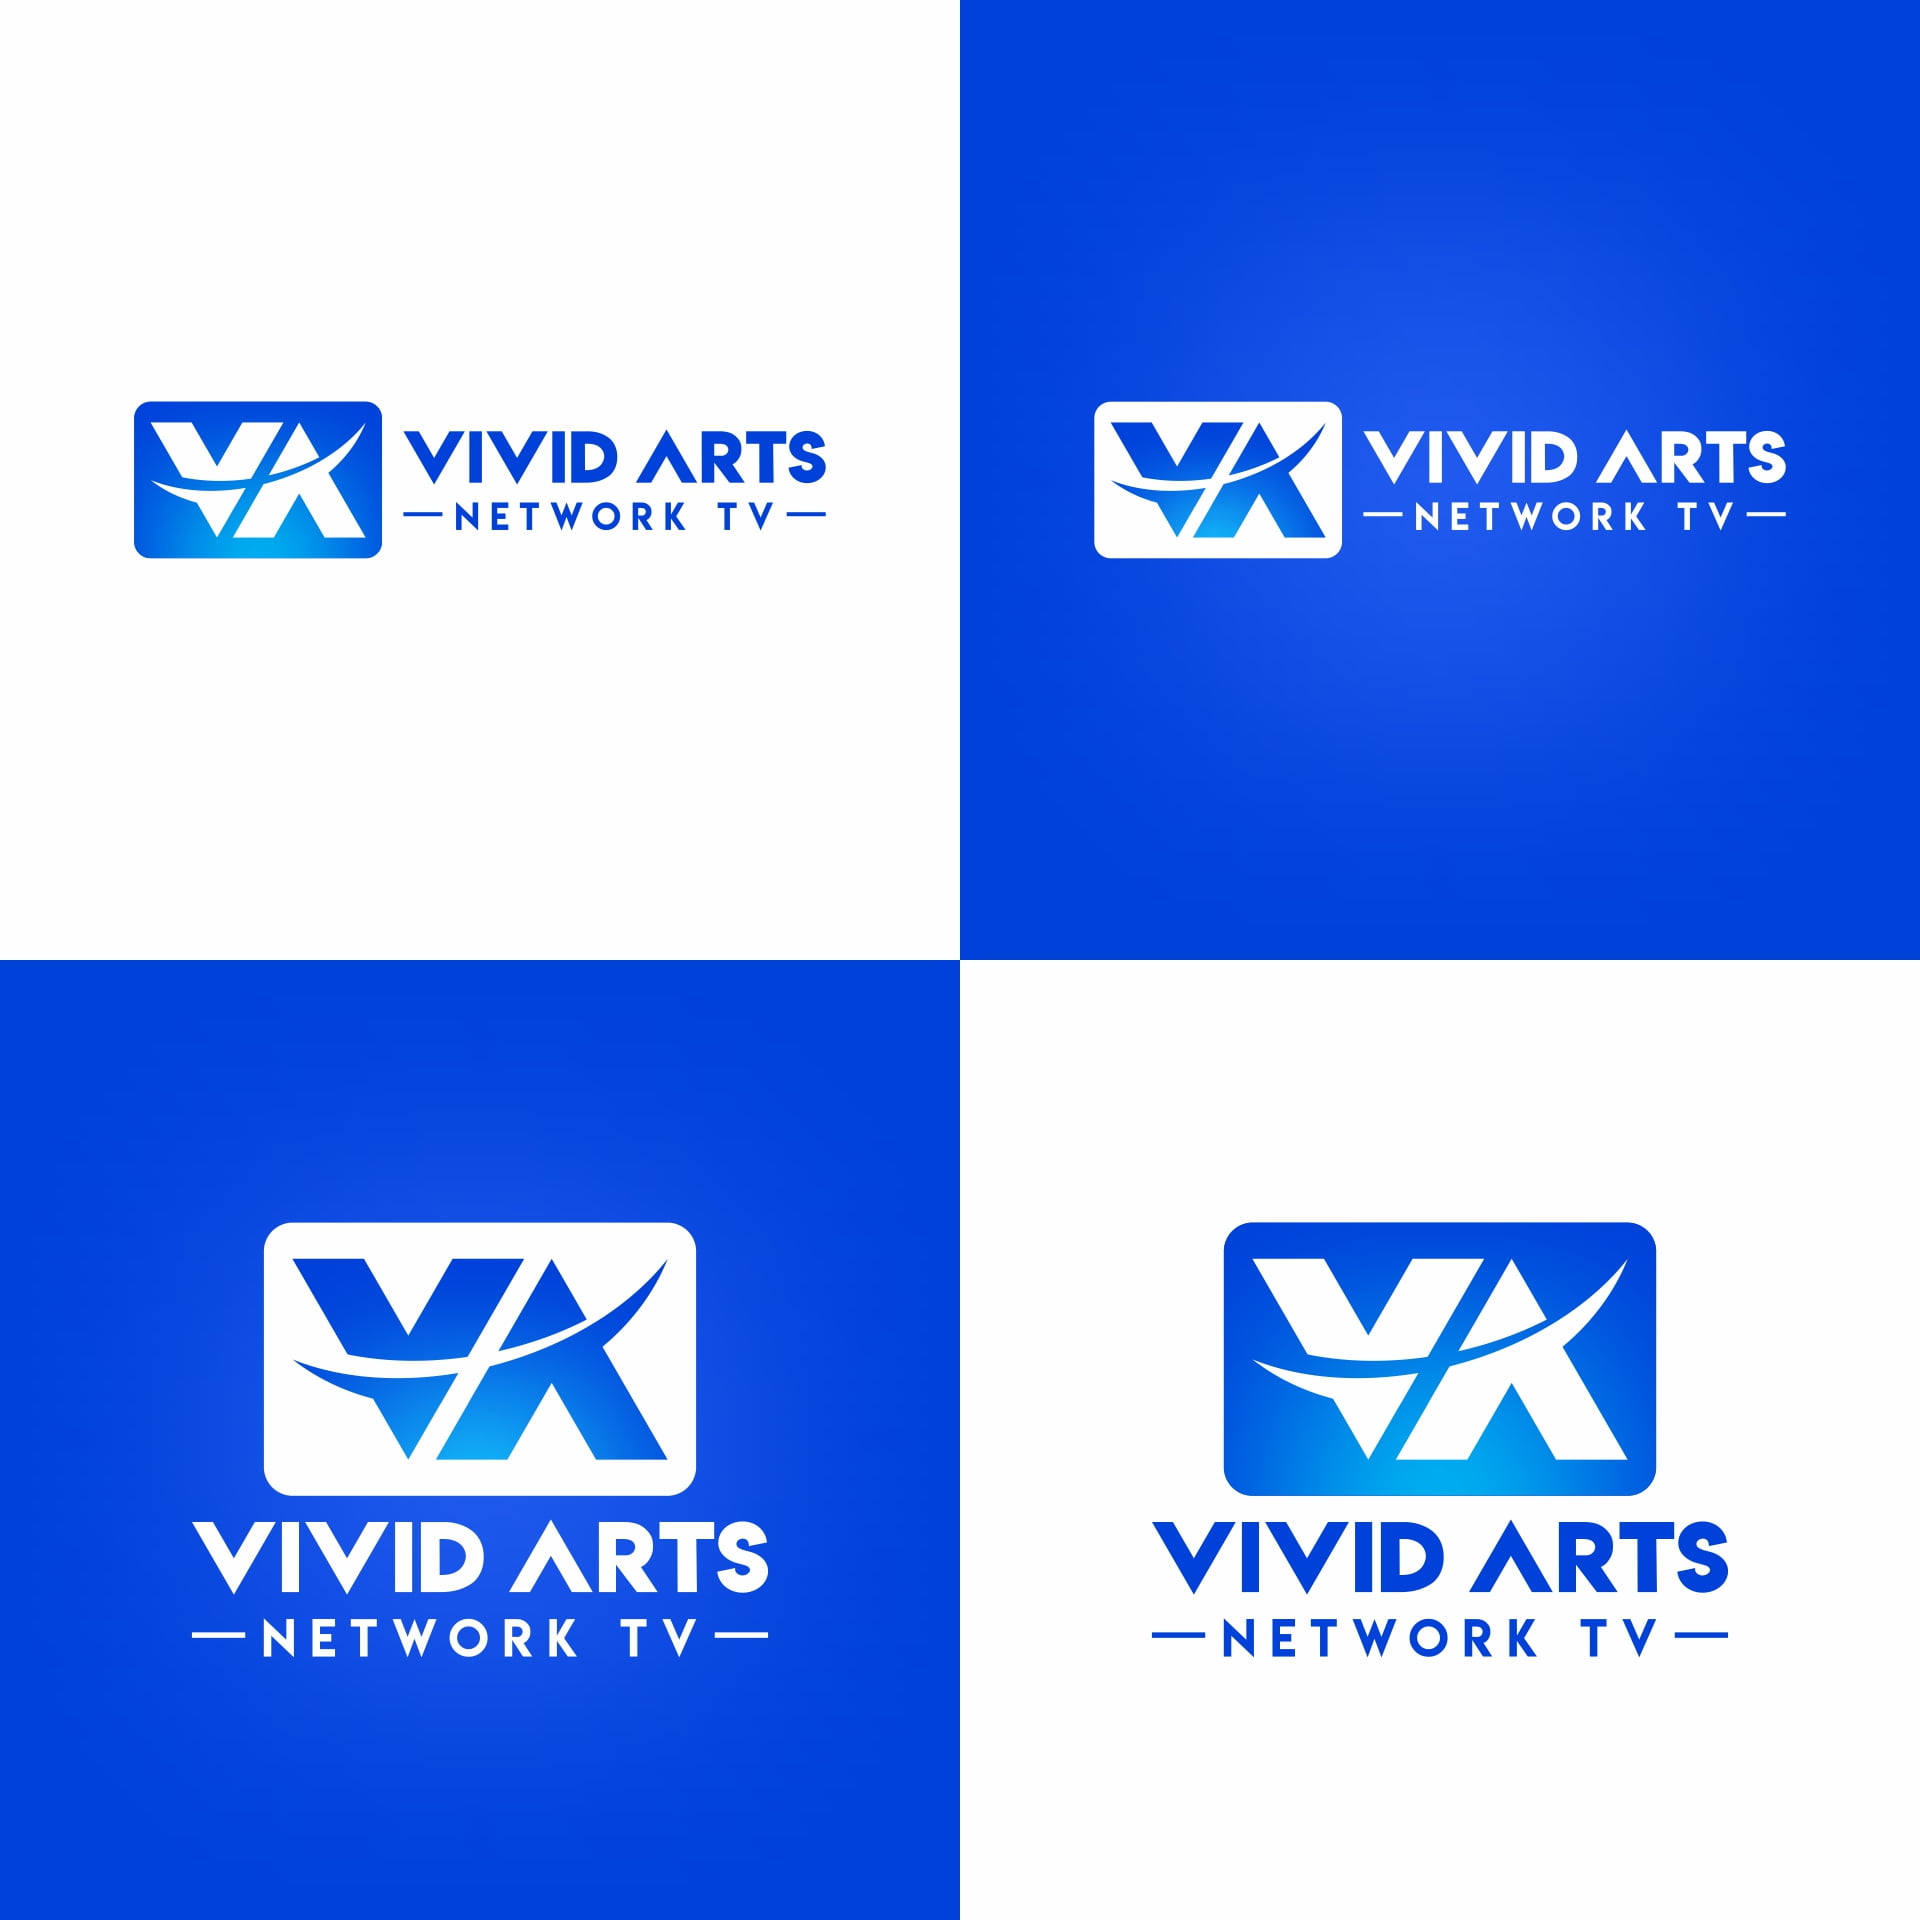 ivid Arts Network TV logo